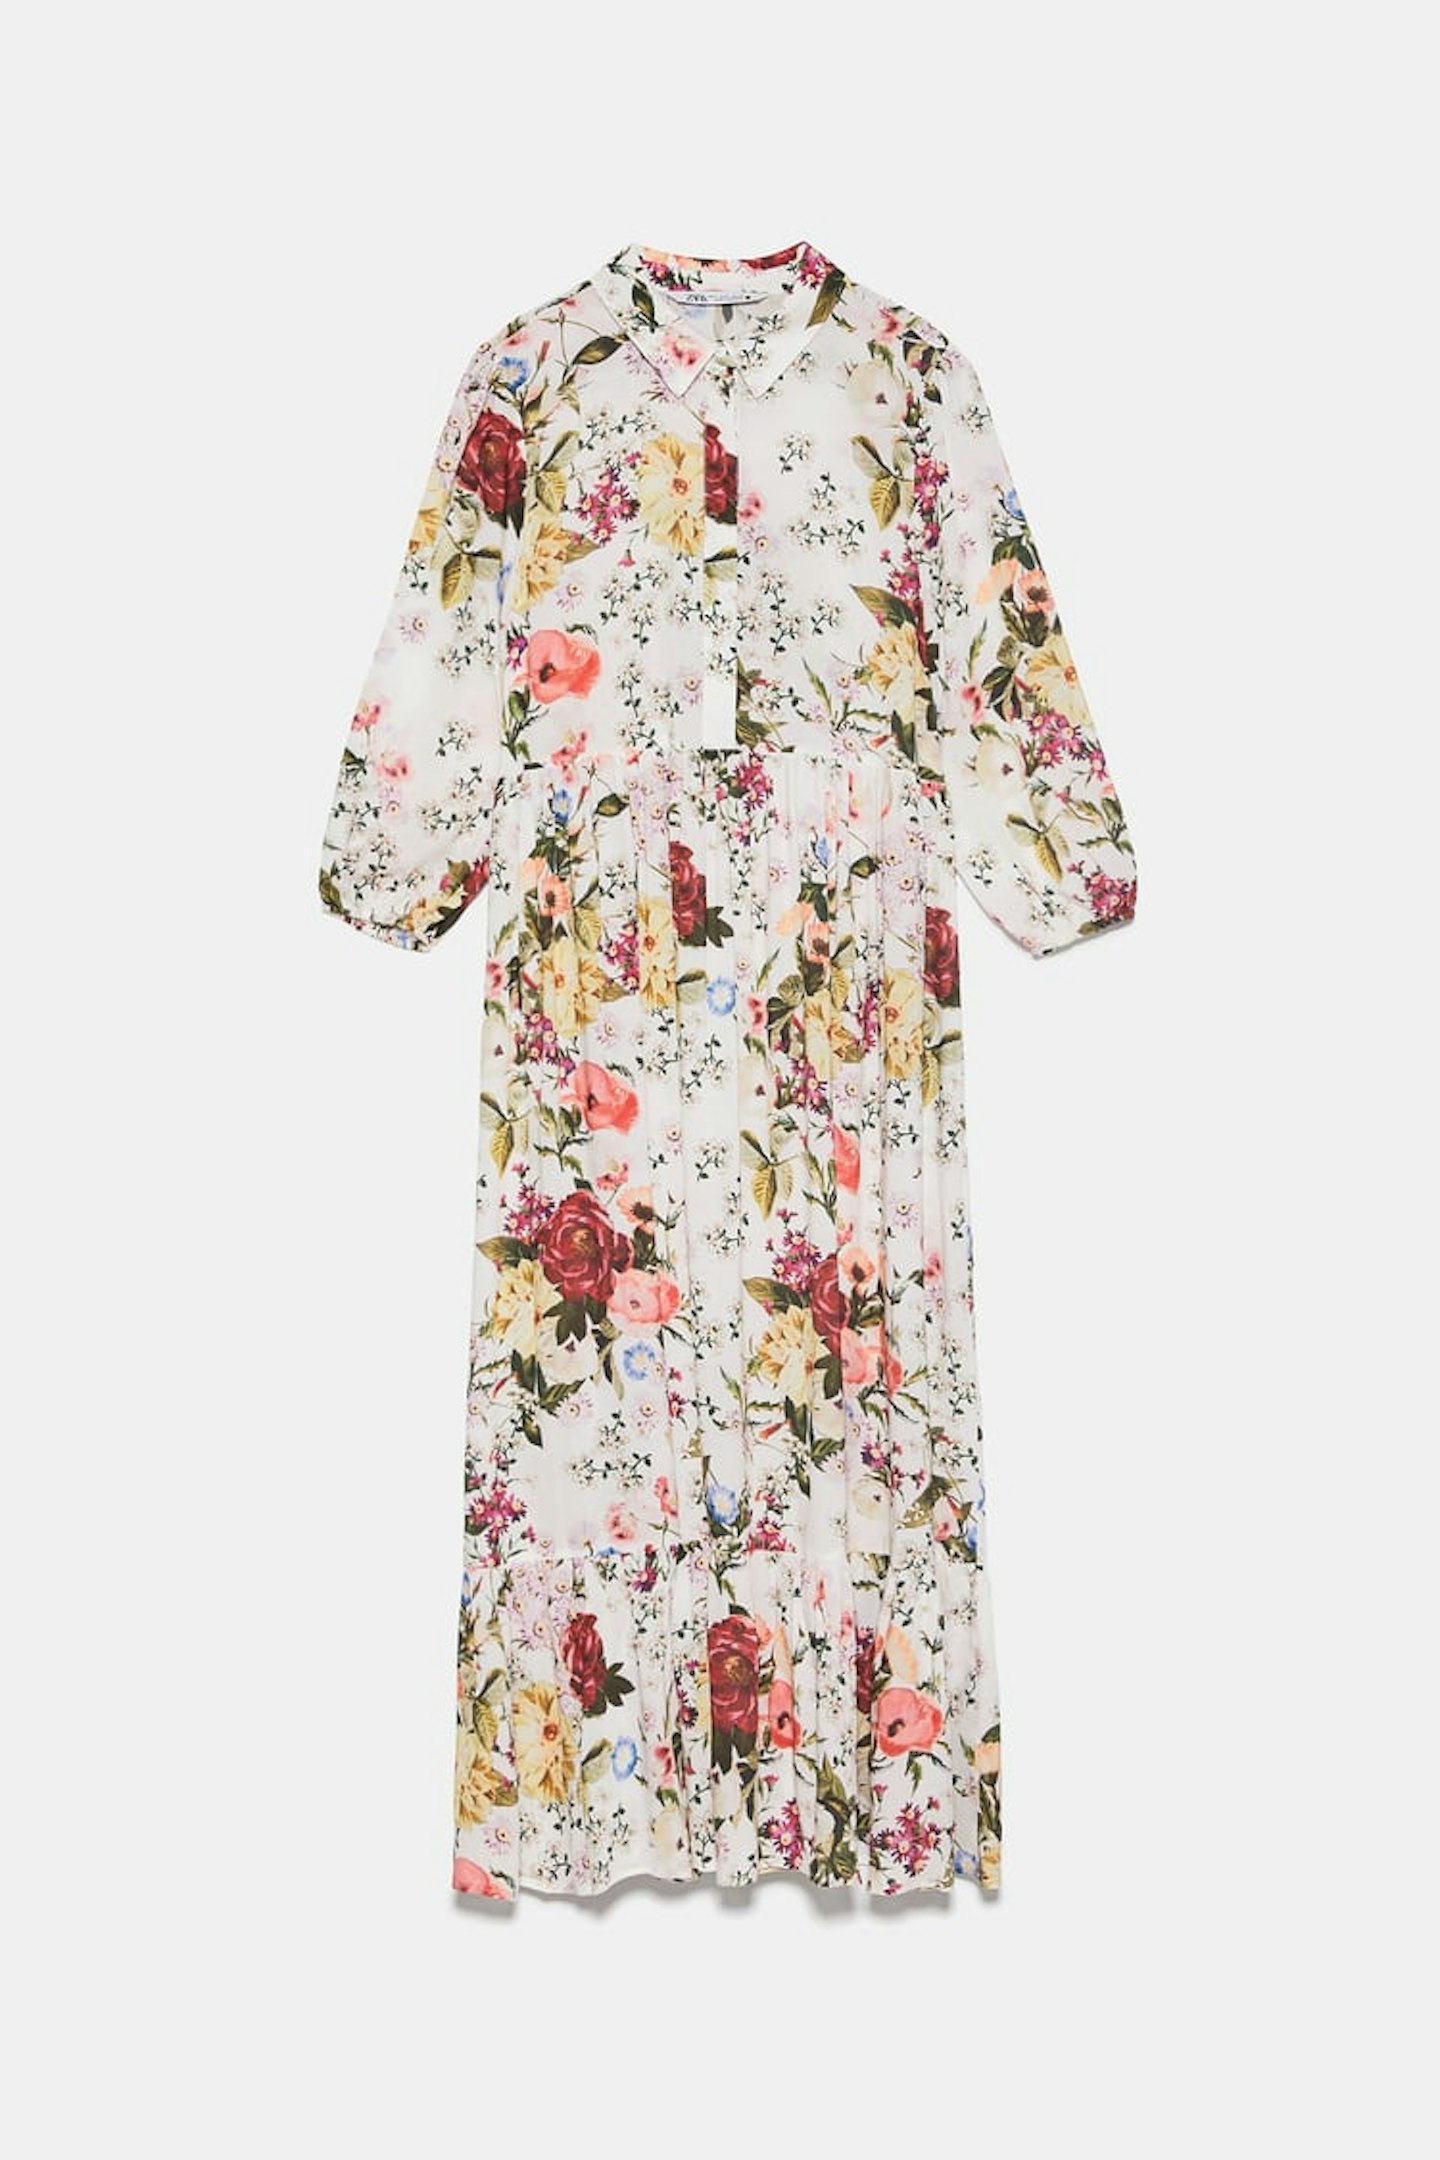 Zara, Floral Dress, £49.99